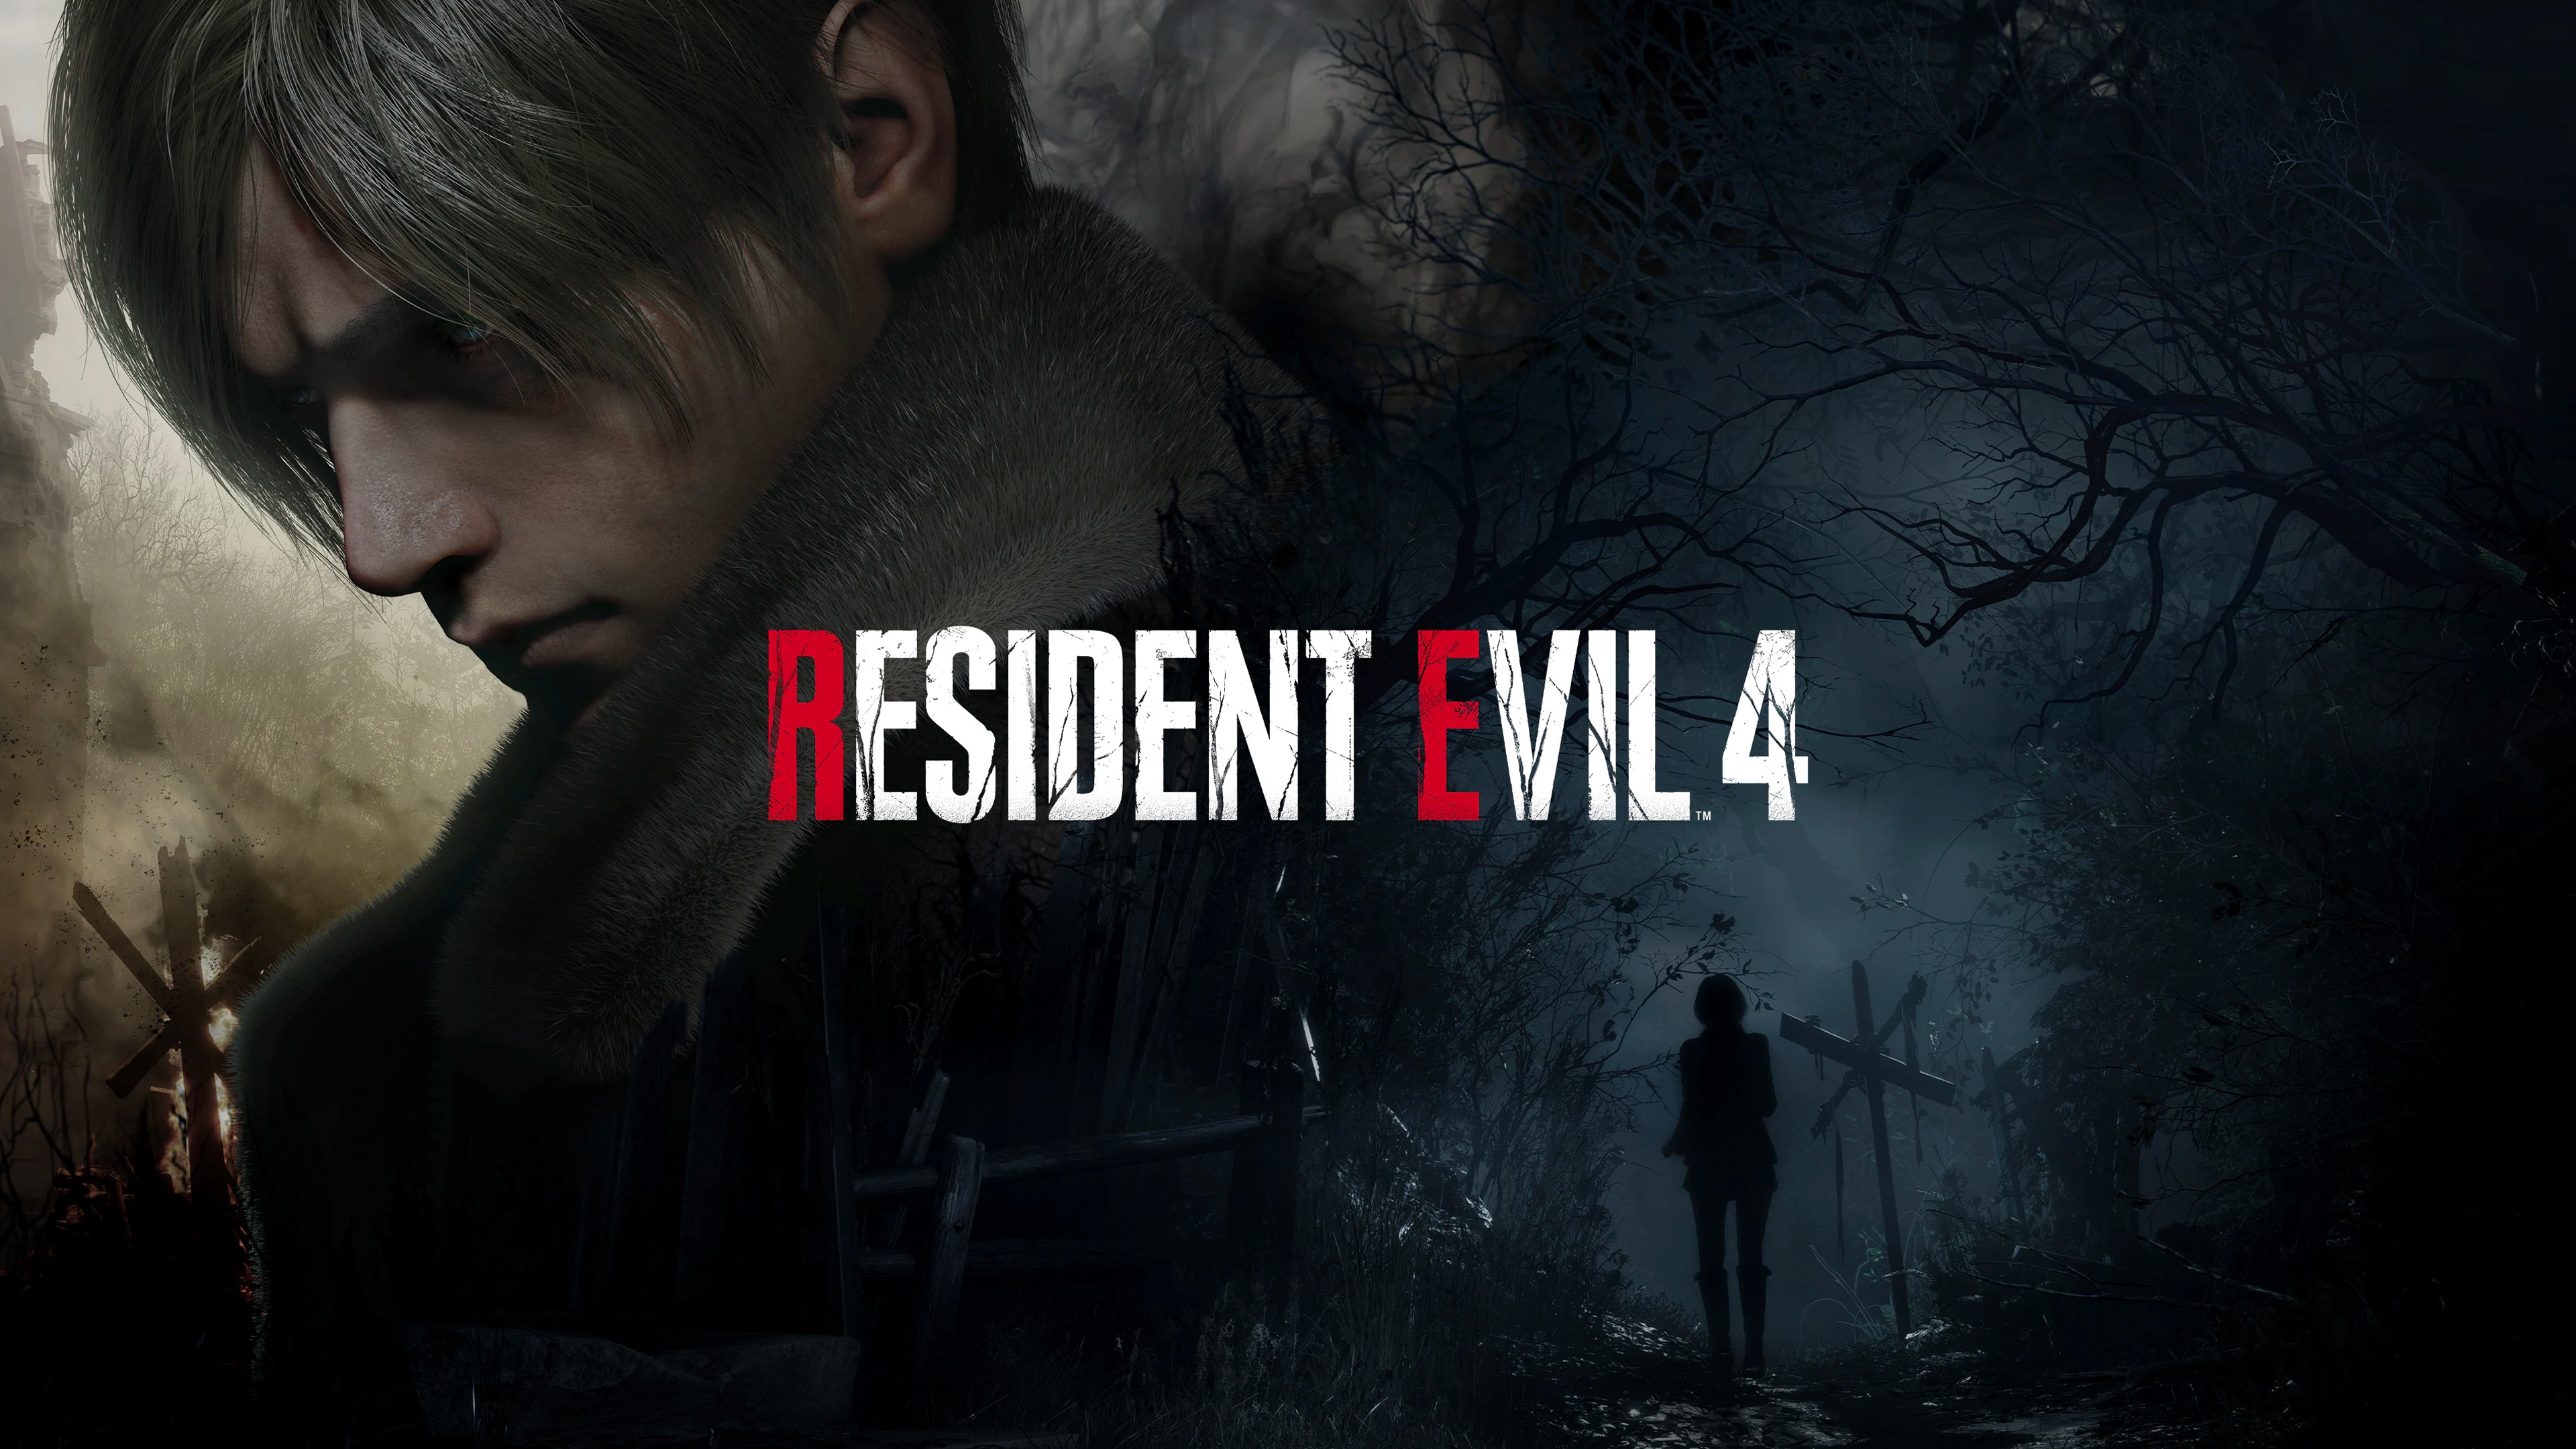 Buy Resident Evil 4, Capcom, Playstation 2 at Ubuy Ireland